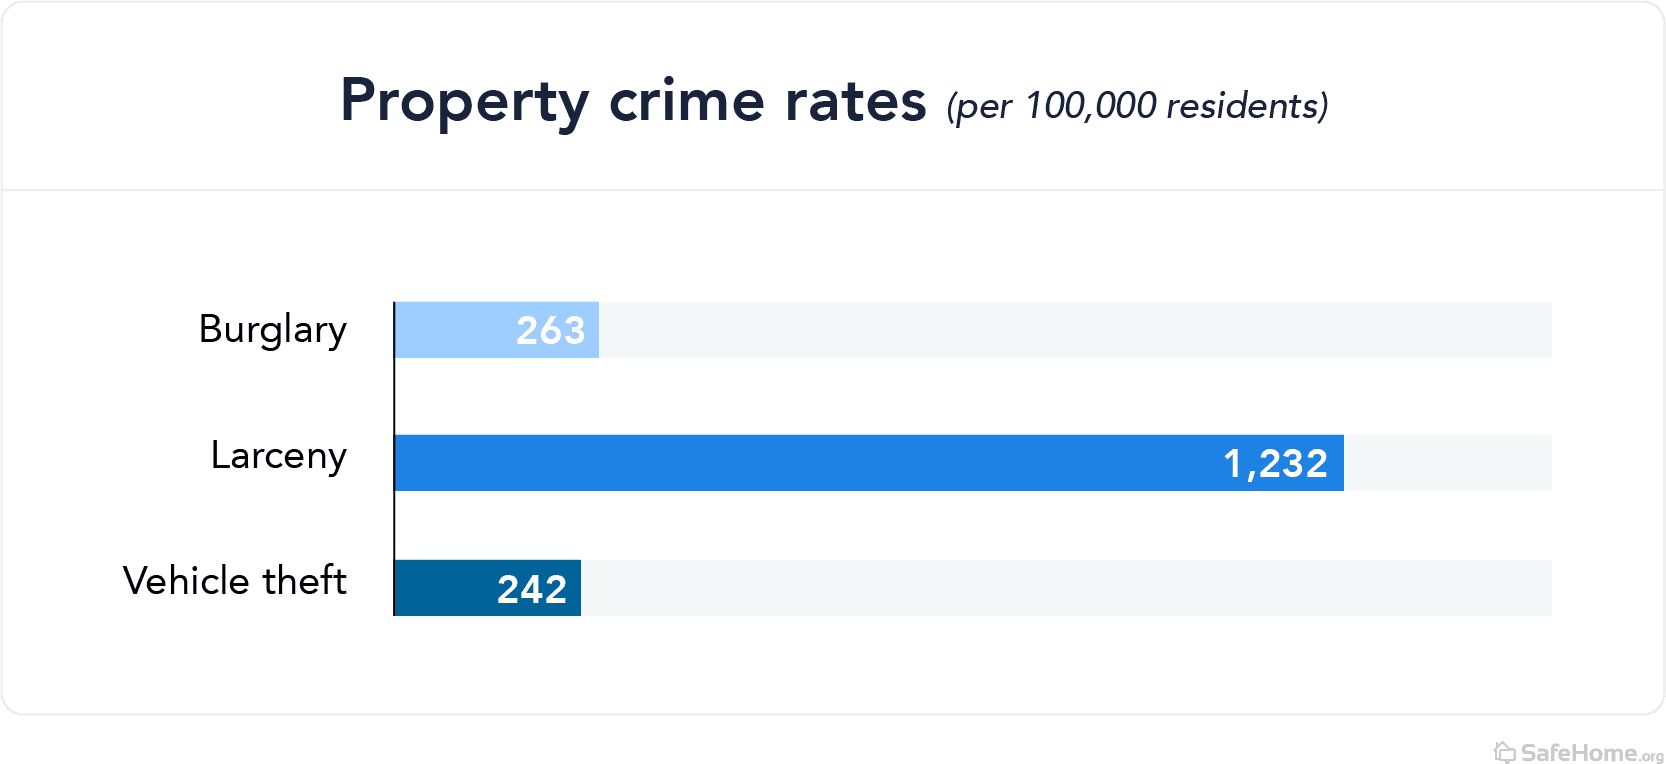 south dakota-property crime rates